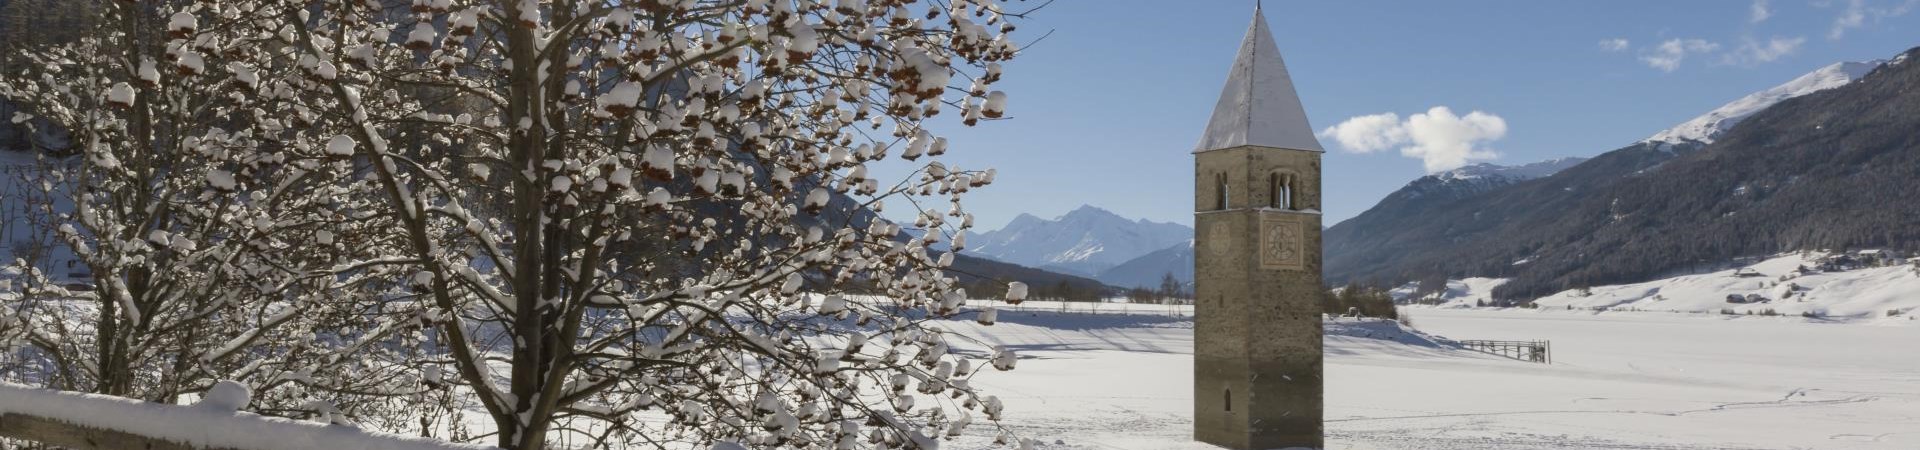 reschensee-turm-winter-vinschgau-fb